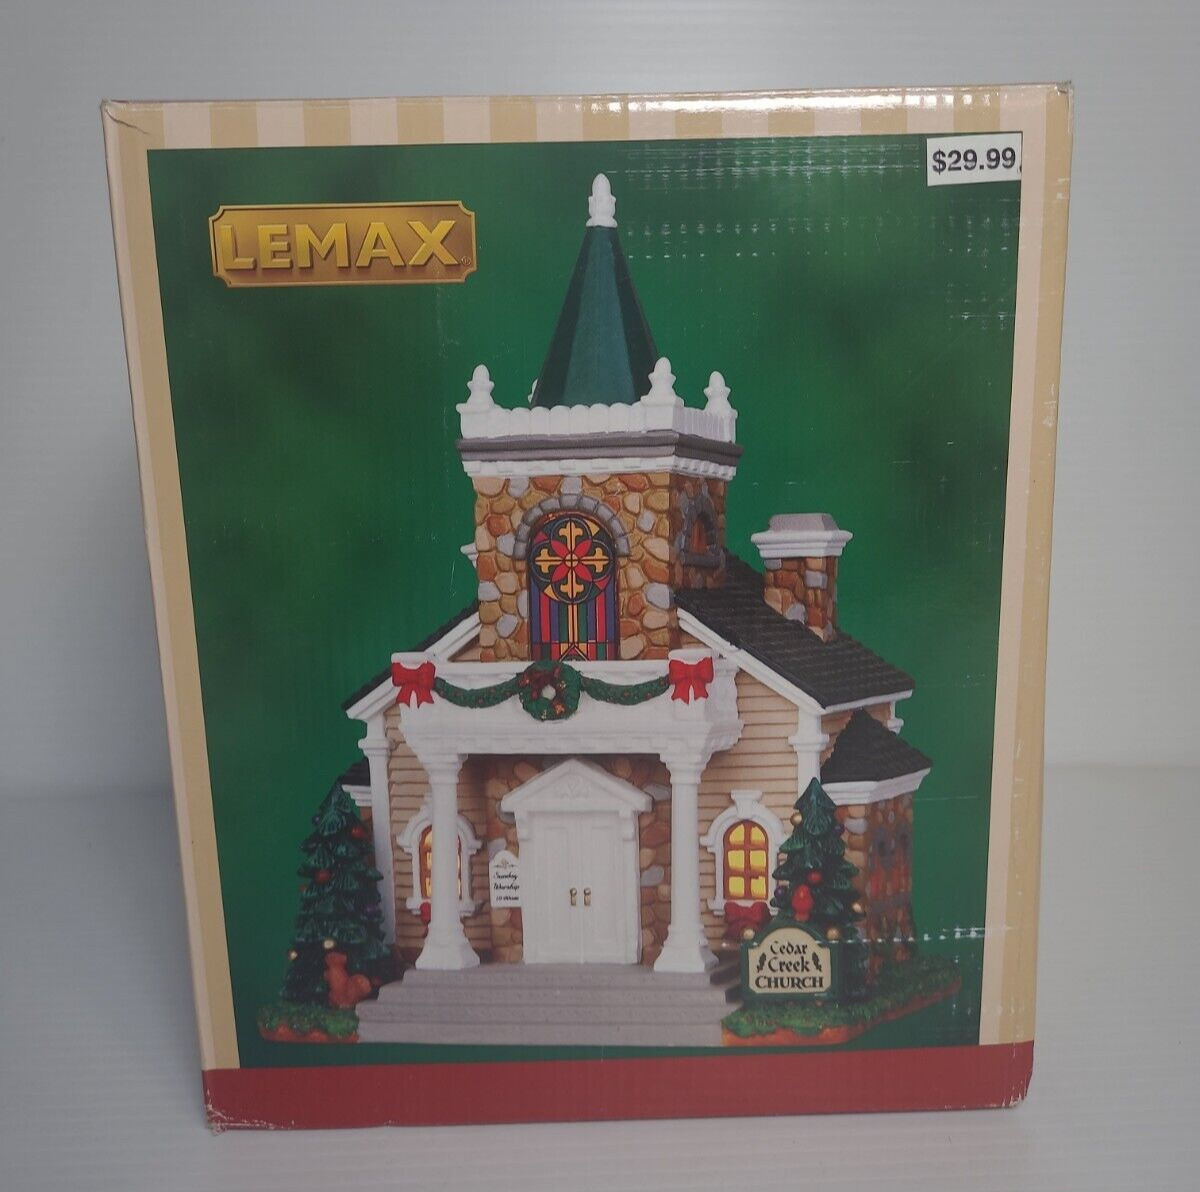 2013 LEMAX CHRISTMAS VILLAGE CEDAR CREEK CHURCH IN ORIGINAL BOX RETIRED Holiday